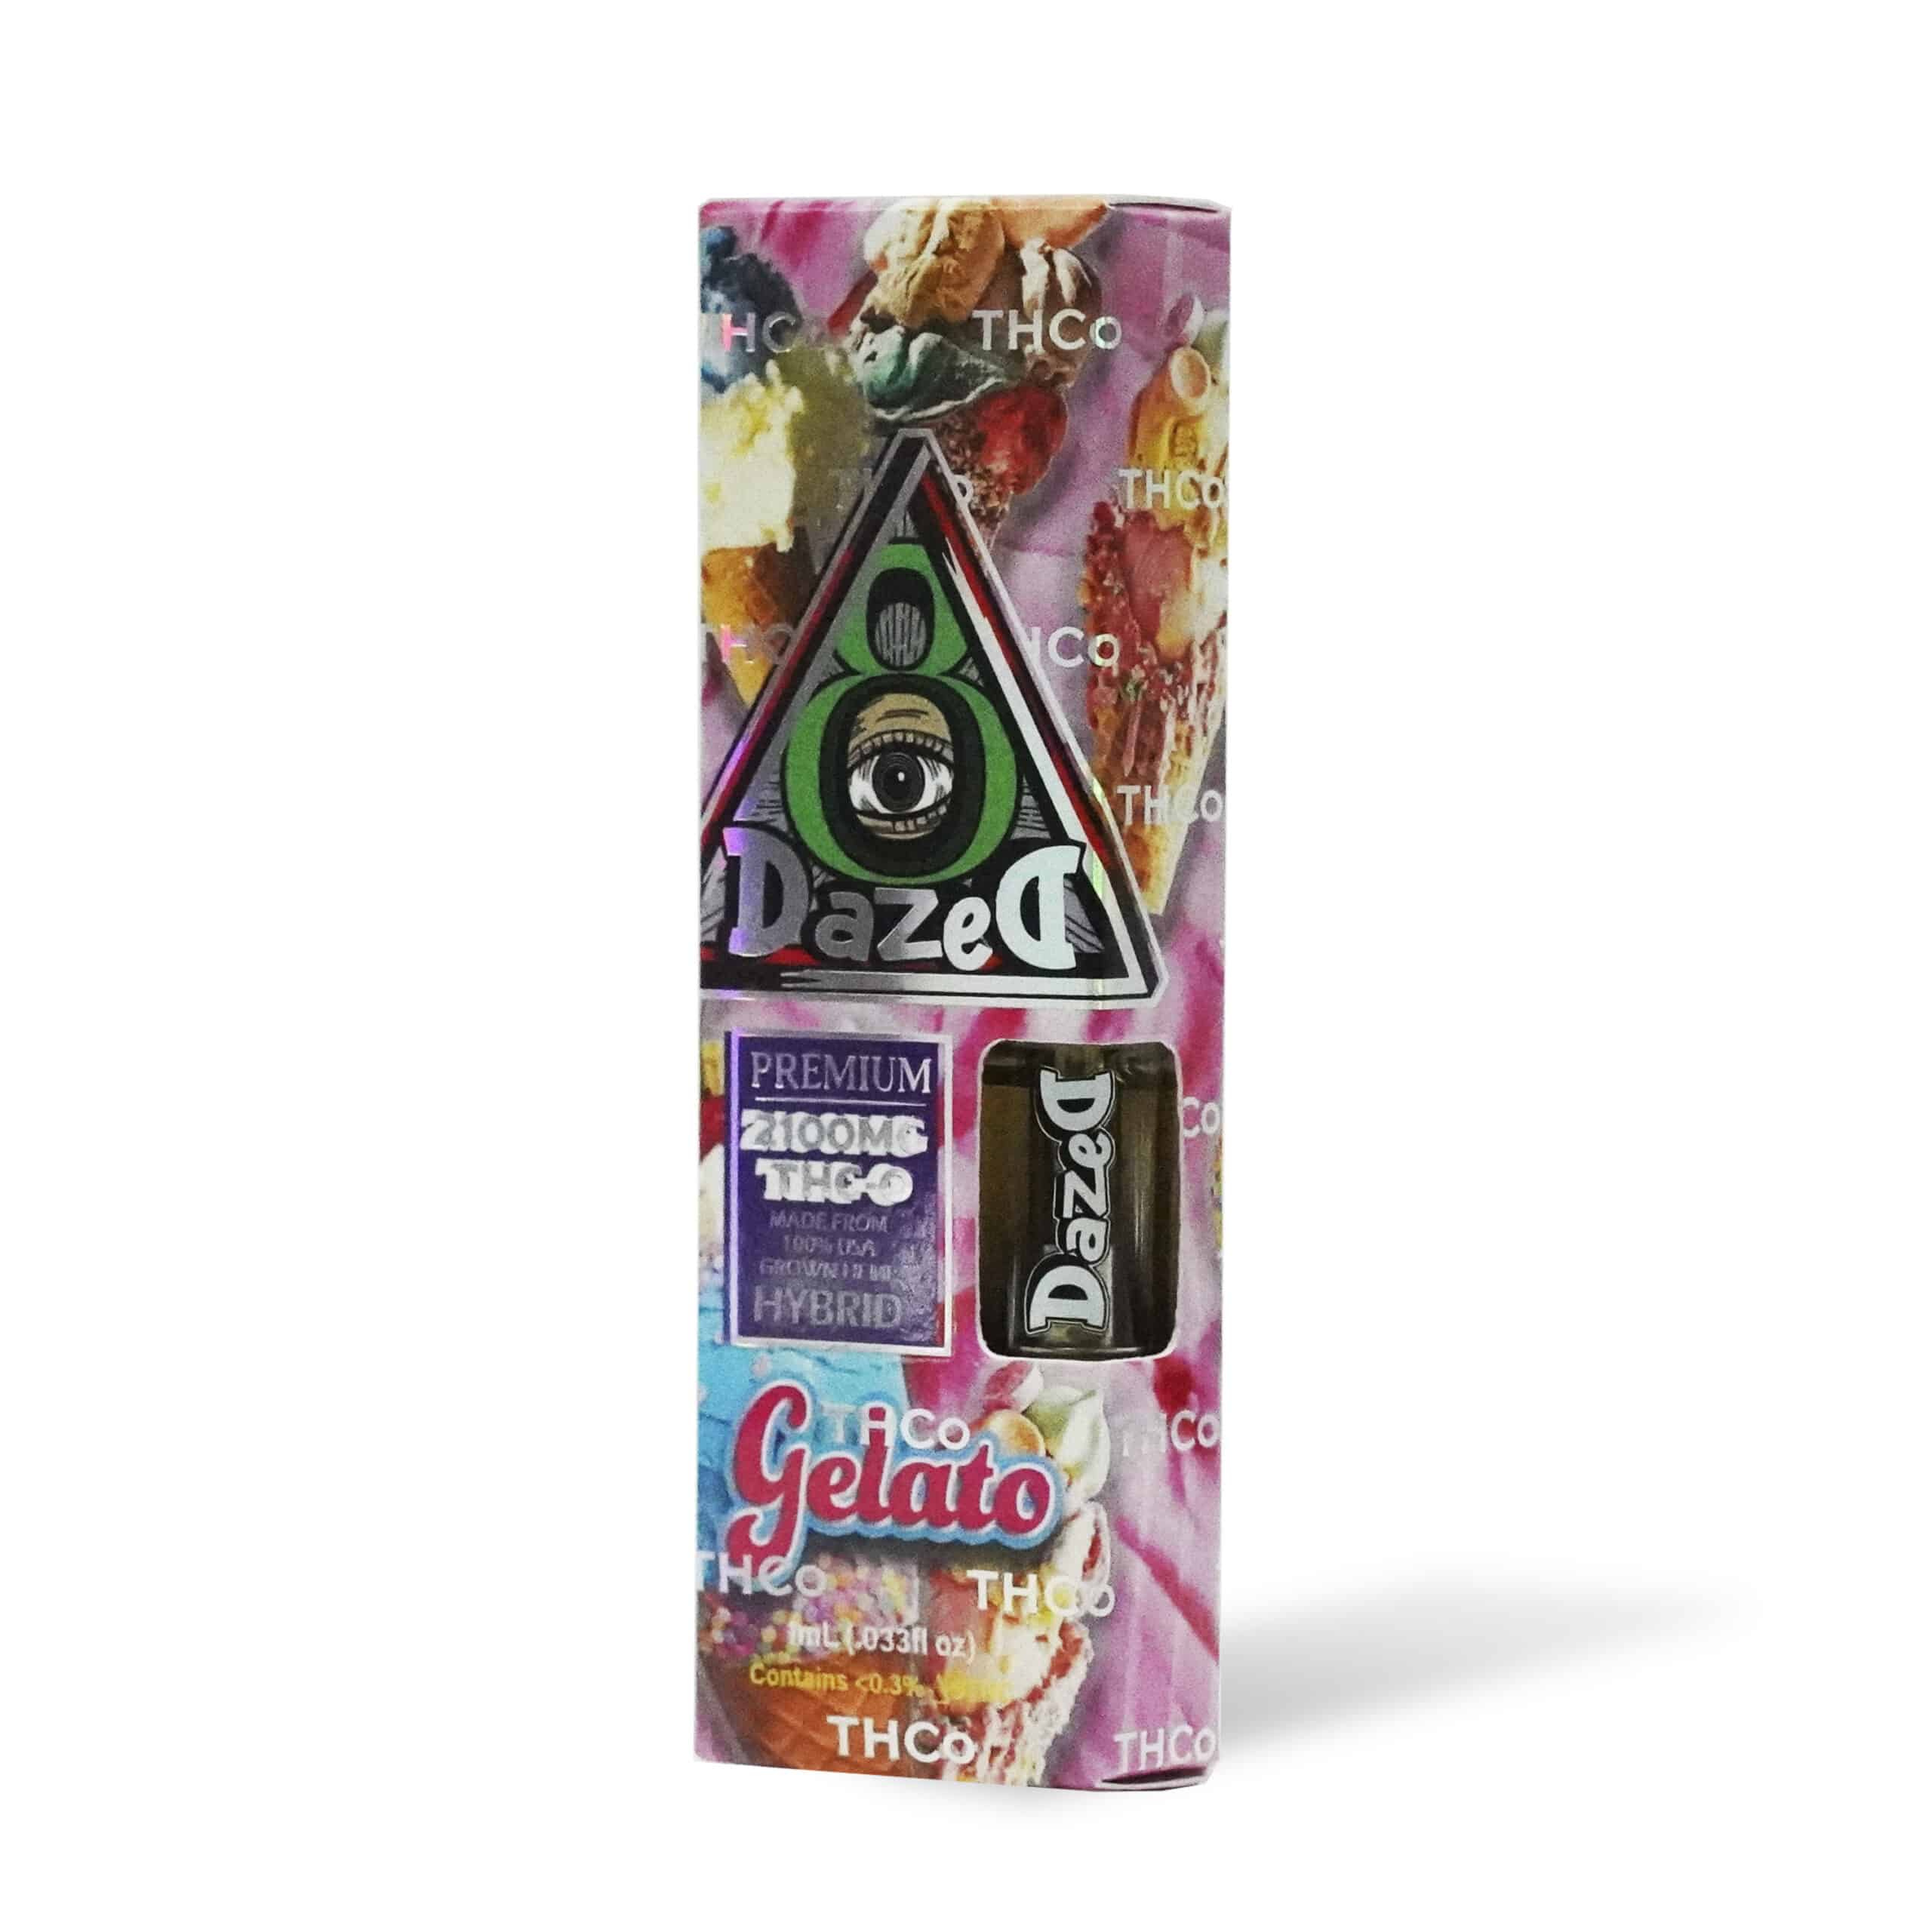 DazeD8 Gelato Delta 8 THC-O Cartridge (2.1g) Best Price